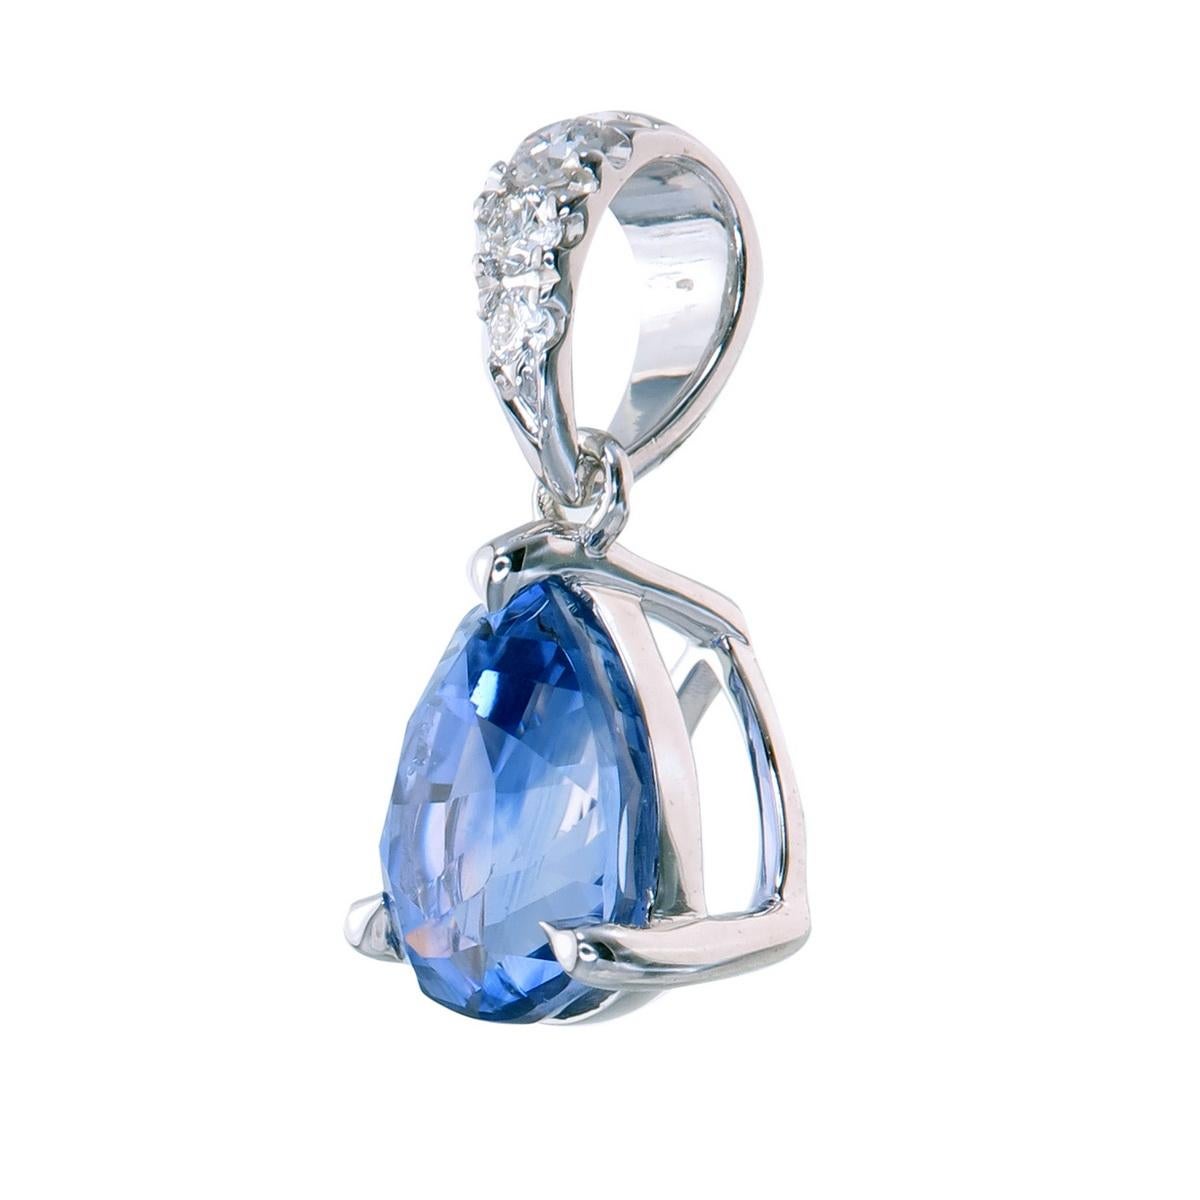 Contemporary Orloff of Denmark, Cornflower Blue Sapphire Diamond Pendant, 14 Karat White Gold